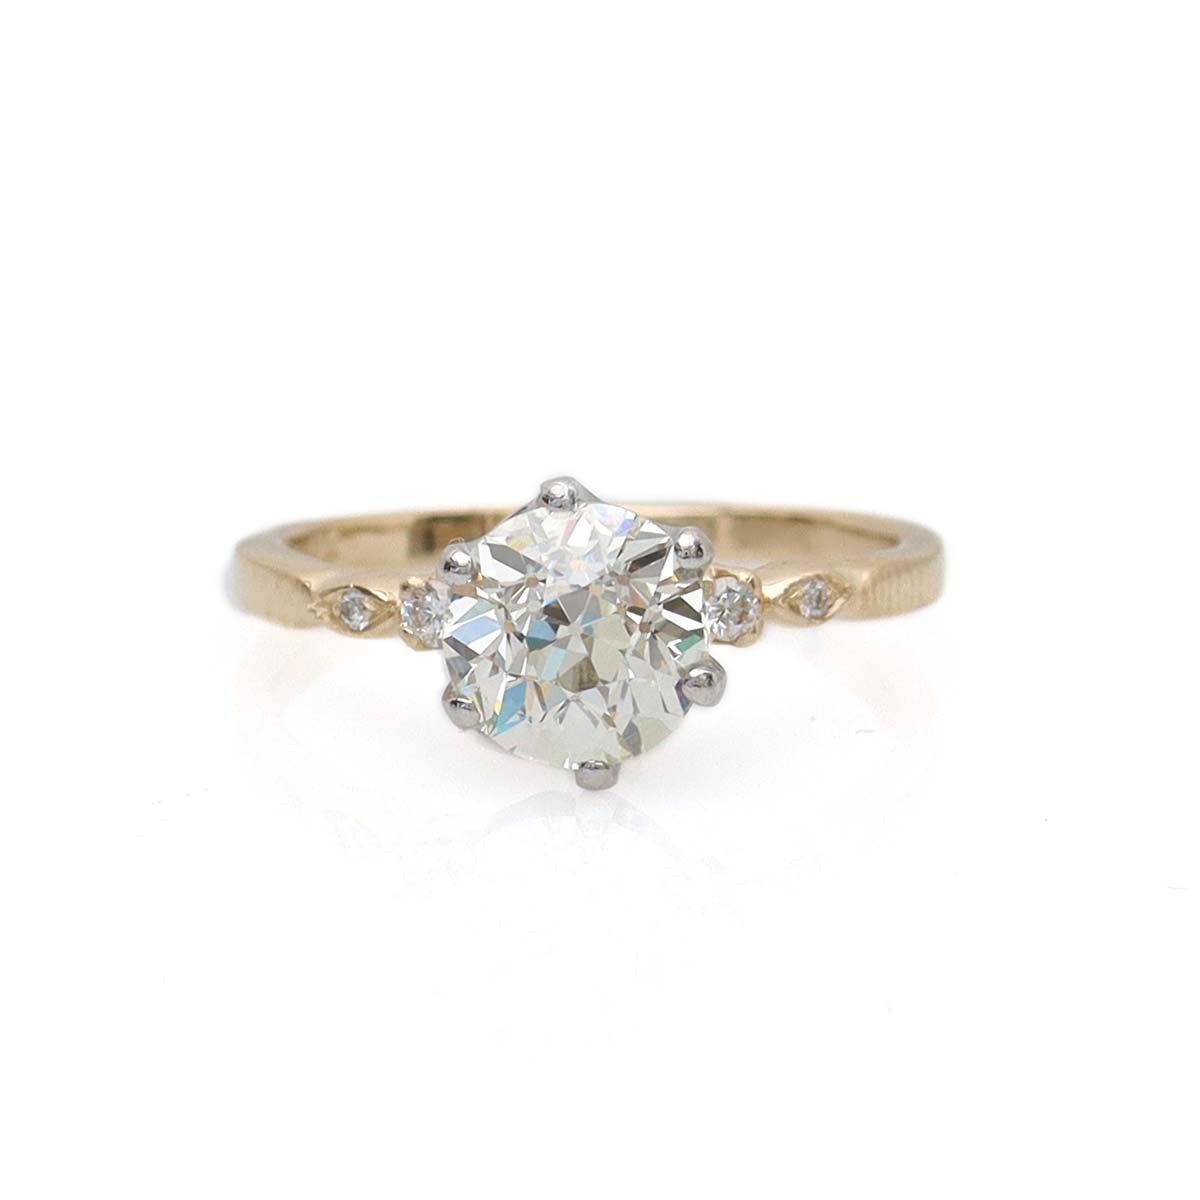 The Cordelia Replica Art Deco Engagement Ring #3510-1